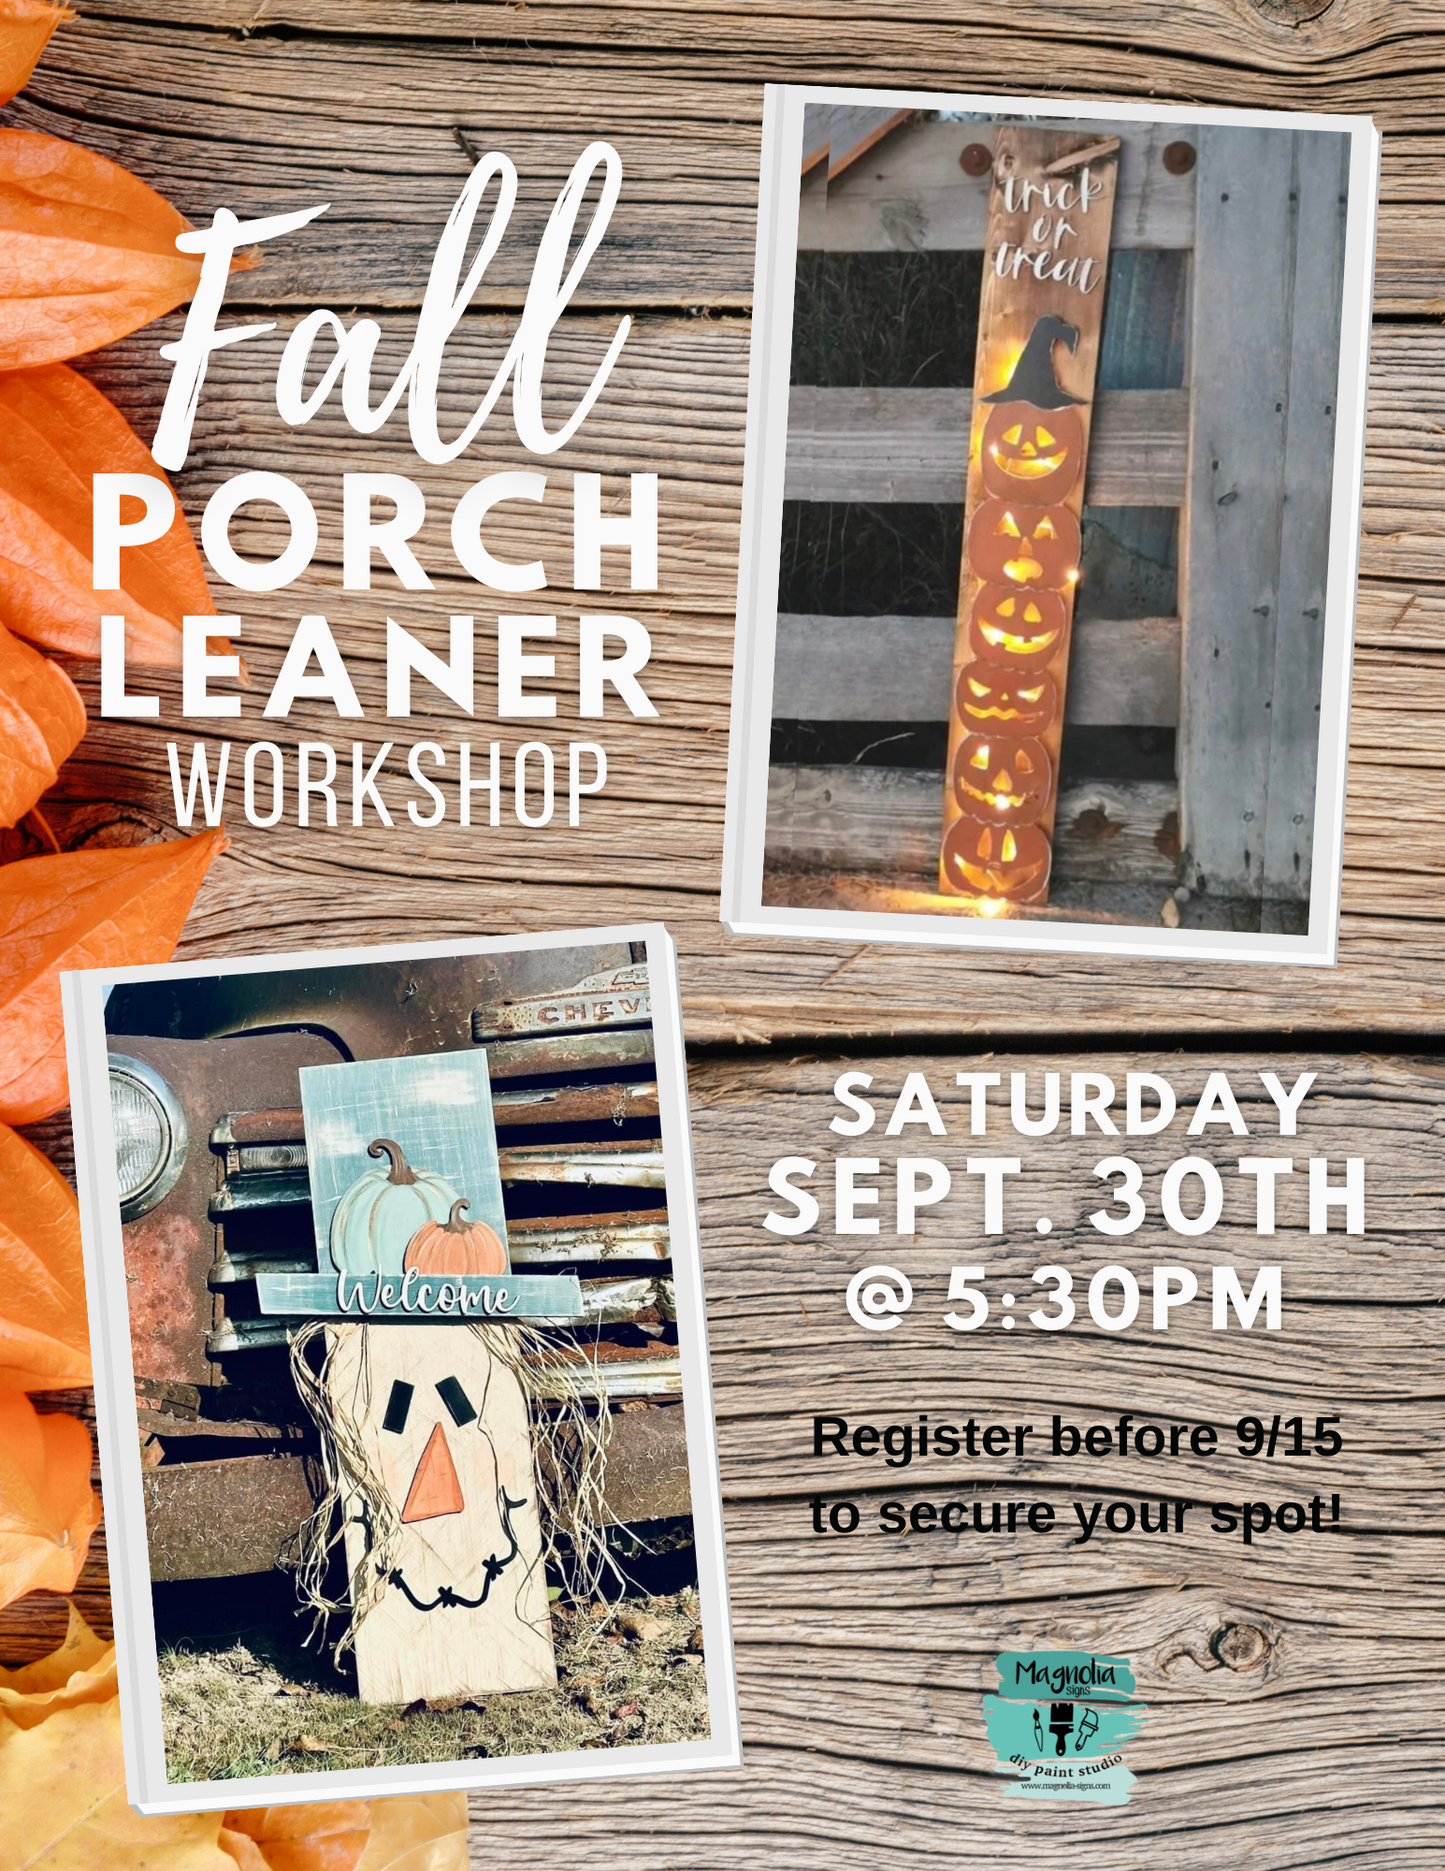 Fall Porch Leaner Workshop